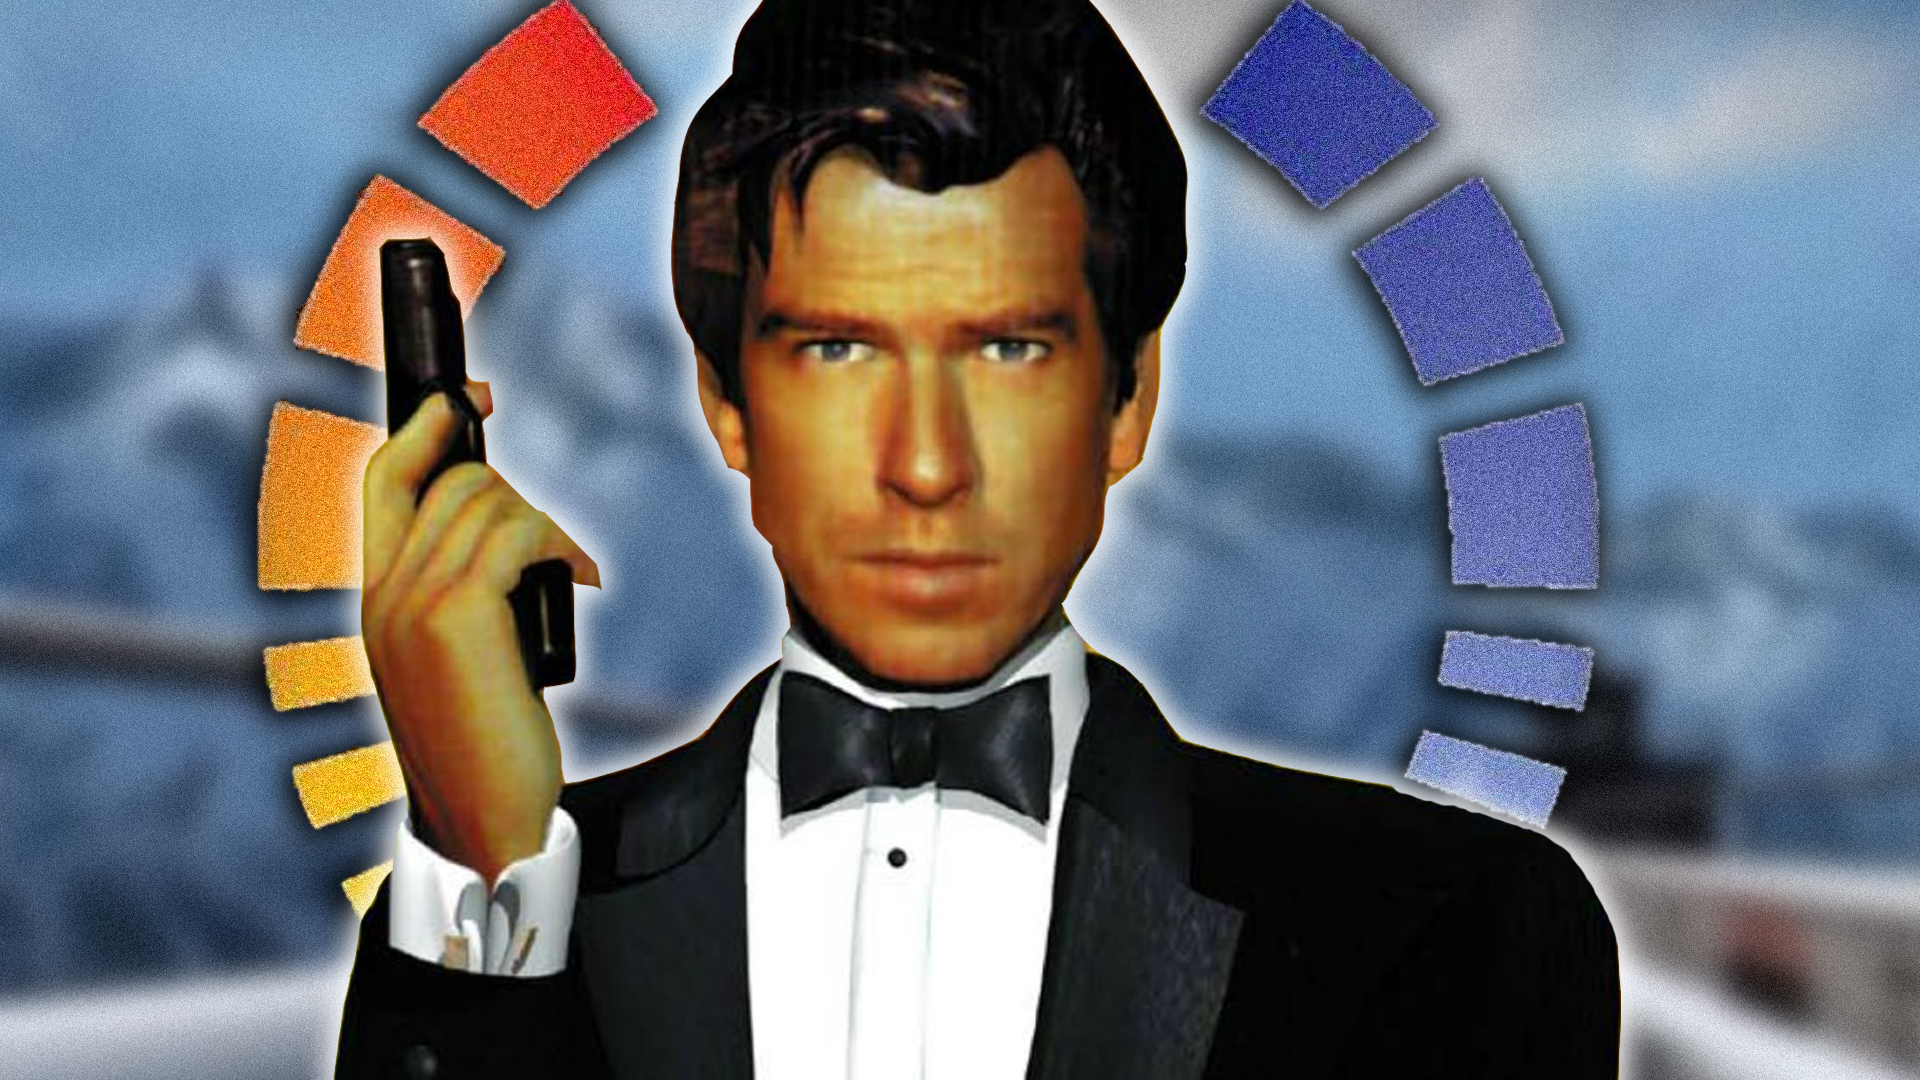 Goldeneye 007 Updated Multiplayer Hands-On - GameSpot